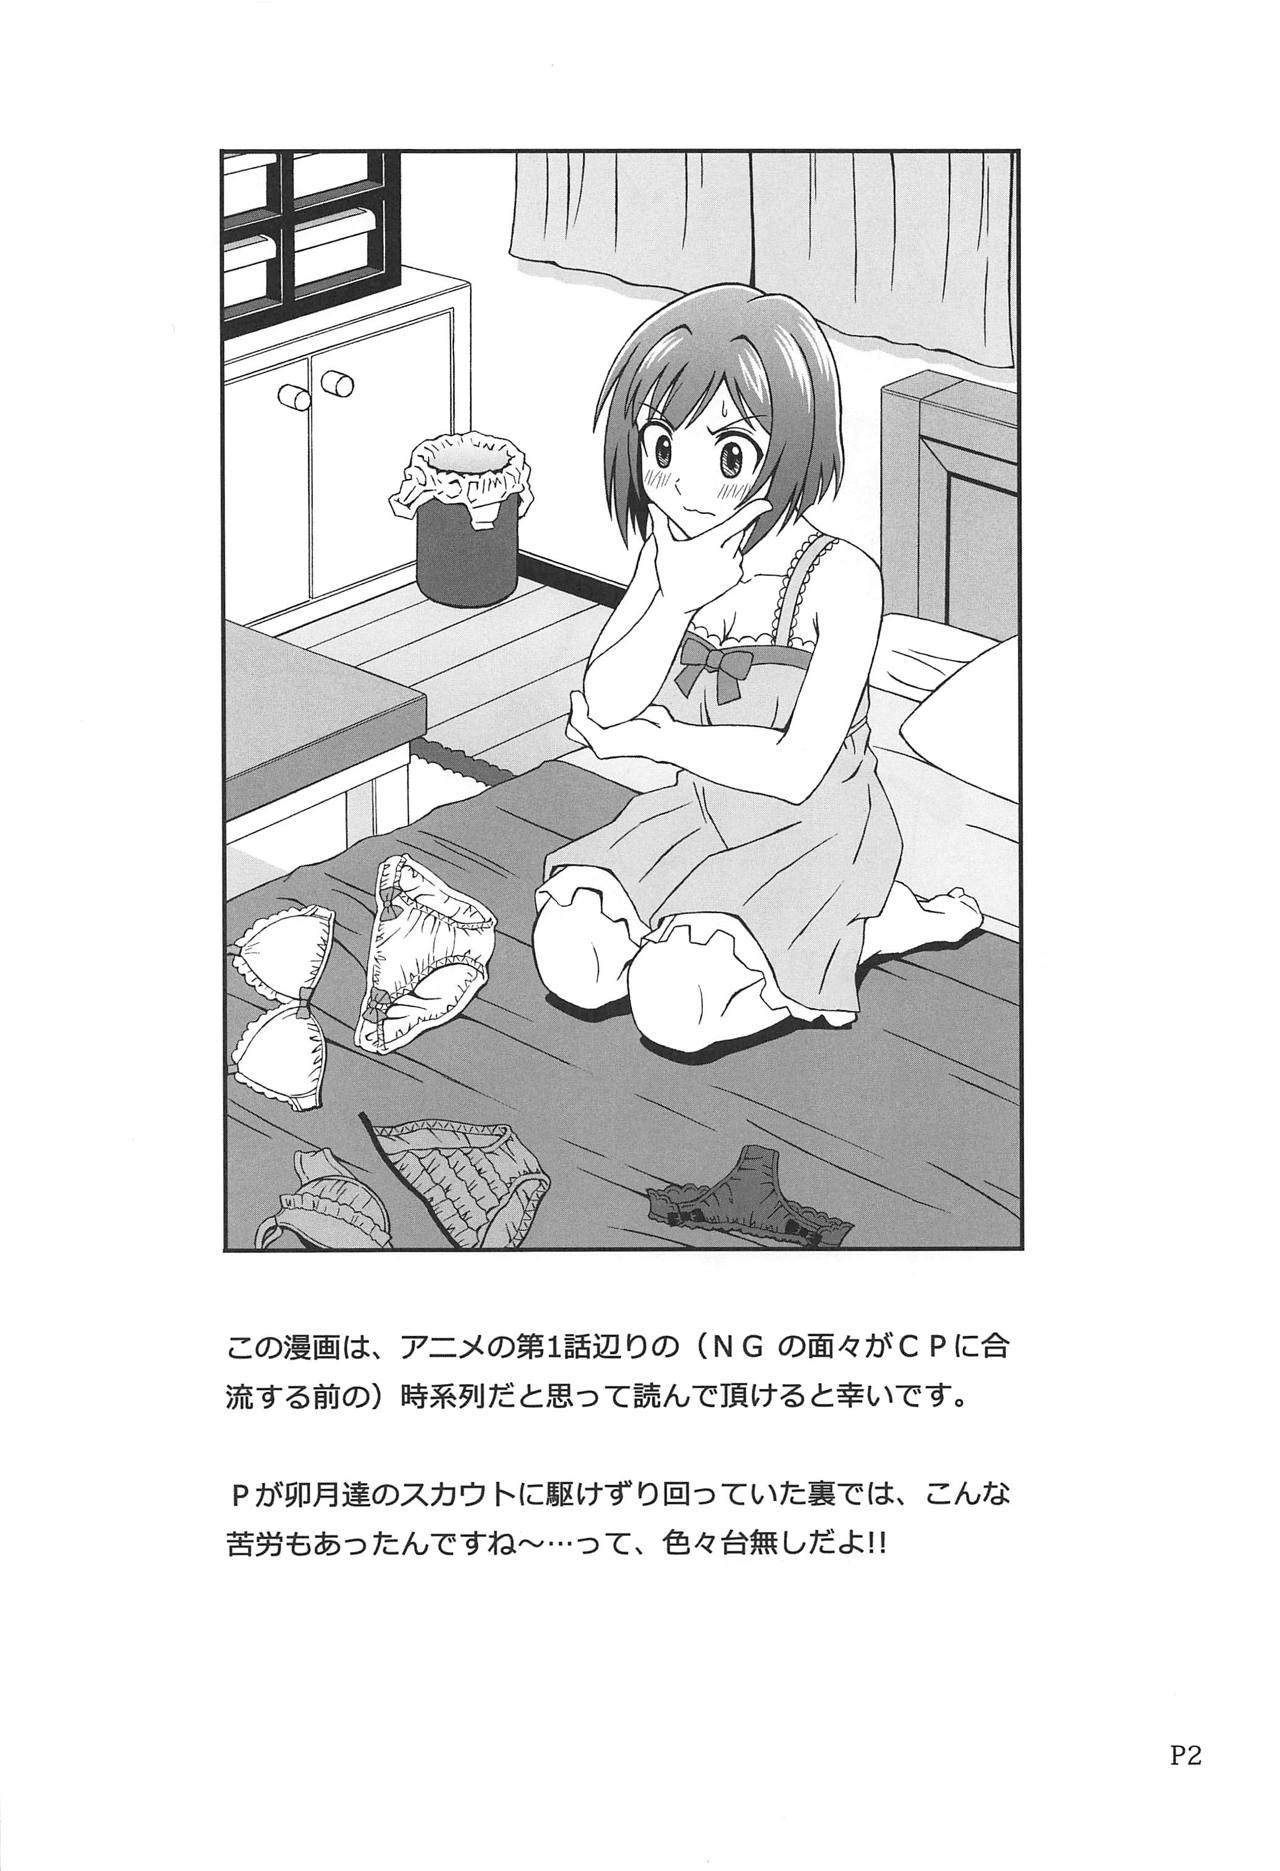 (C89) [あね屋 (にっし～☆)] Help me with my glass slippers, will you? (アイドルマスター シンデレラガールズ)